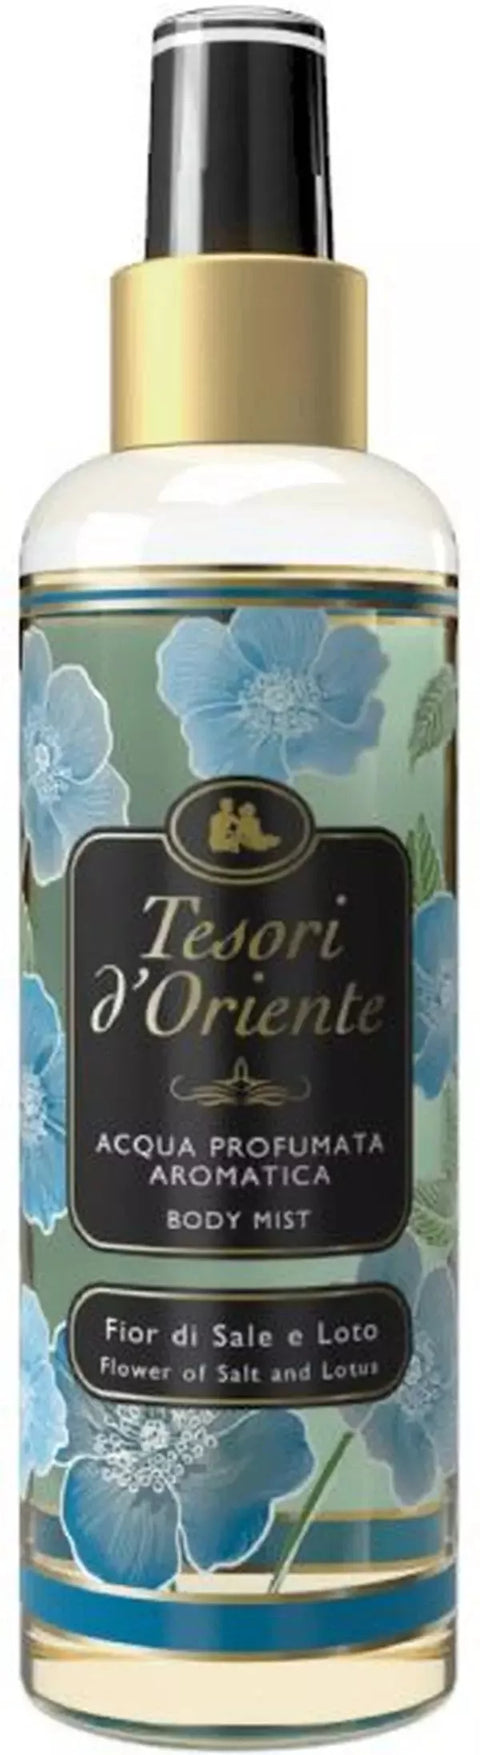 Tesori d'oriente bodymist en parfum flower of salt and lotus - Hemelse-geuren.nl